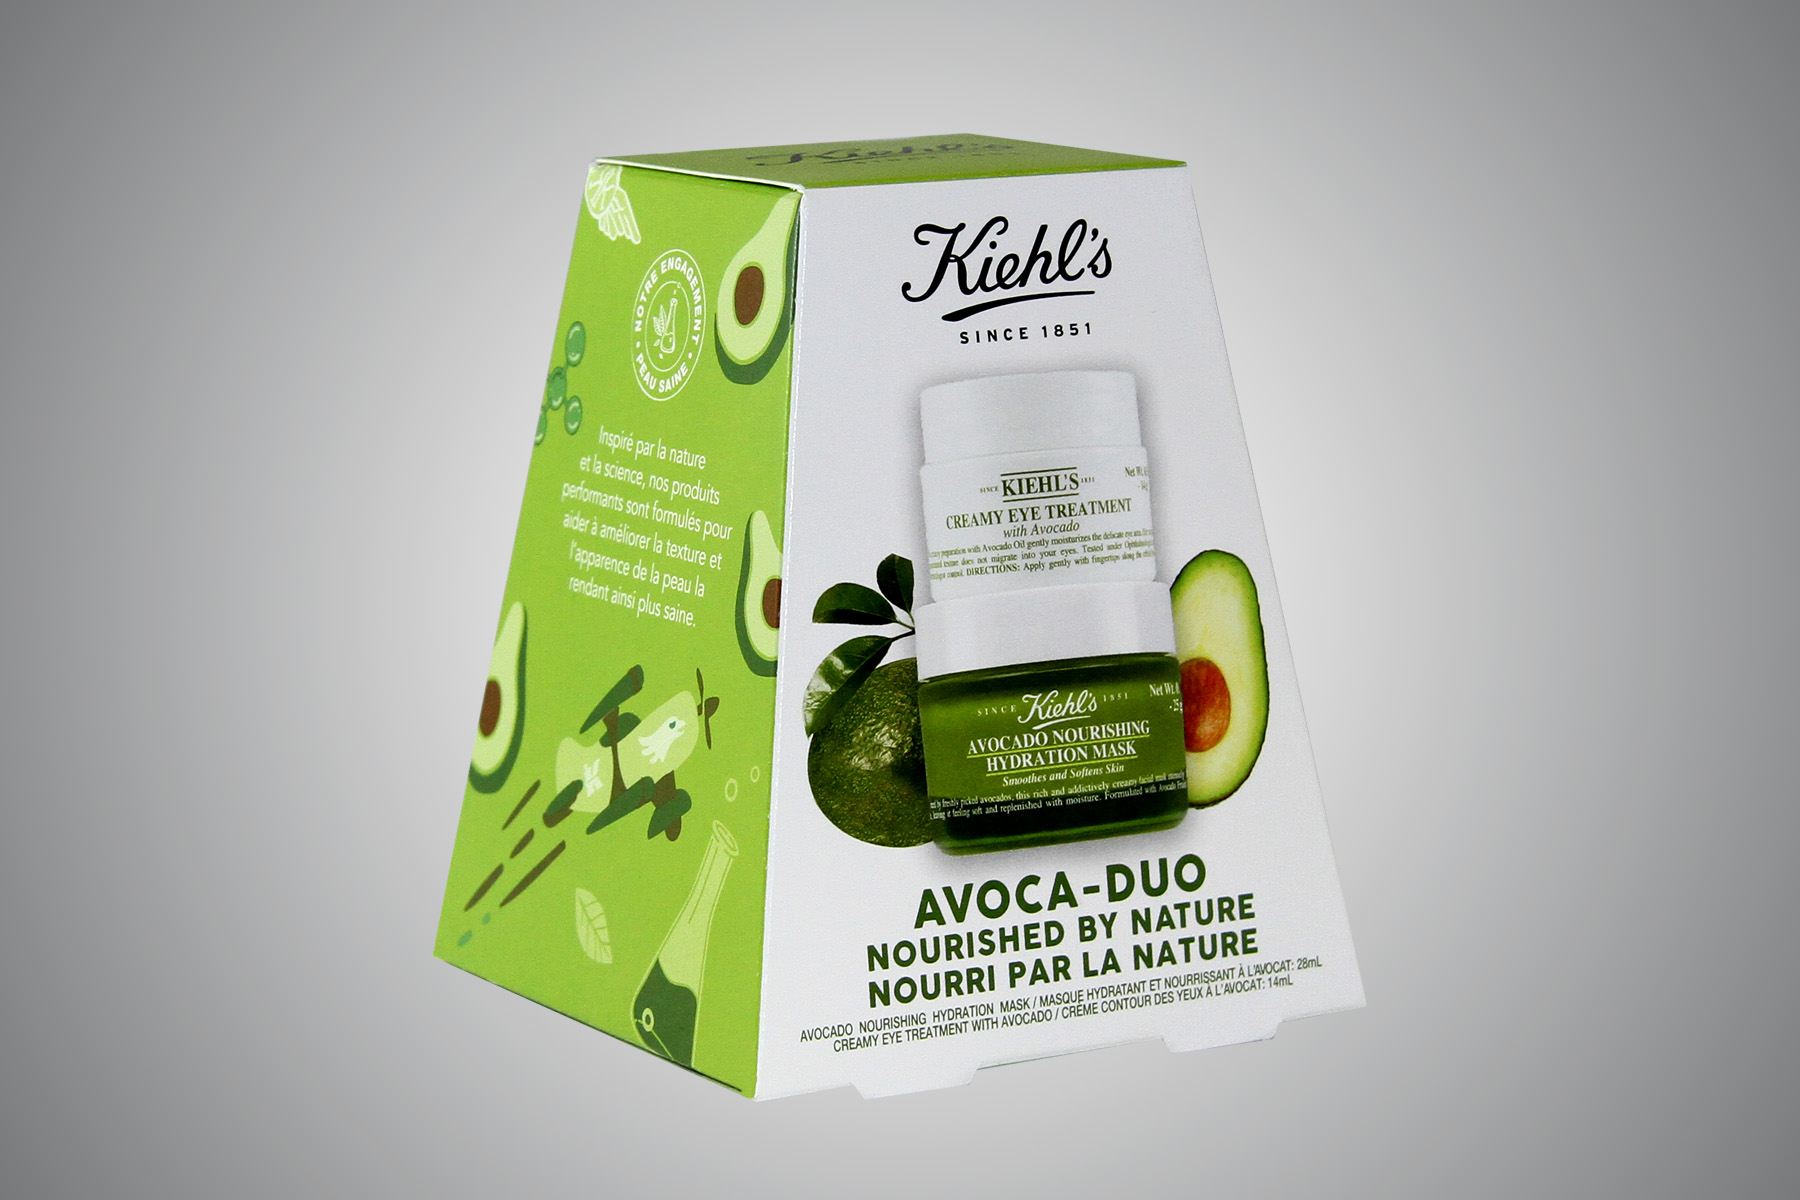 Kiehl’s avocado duo